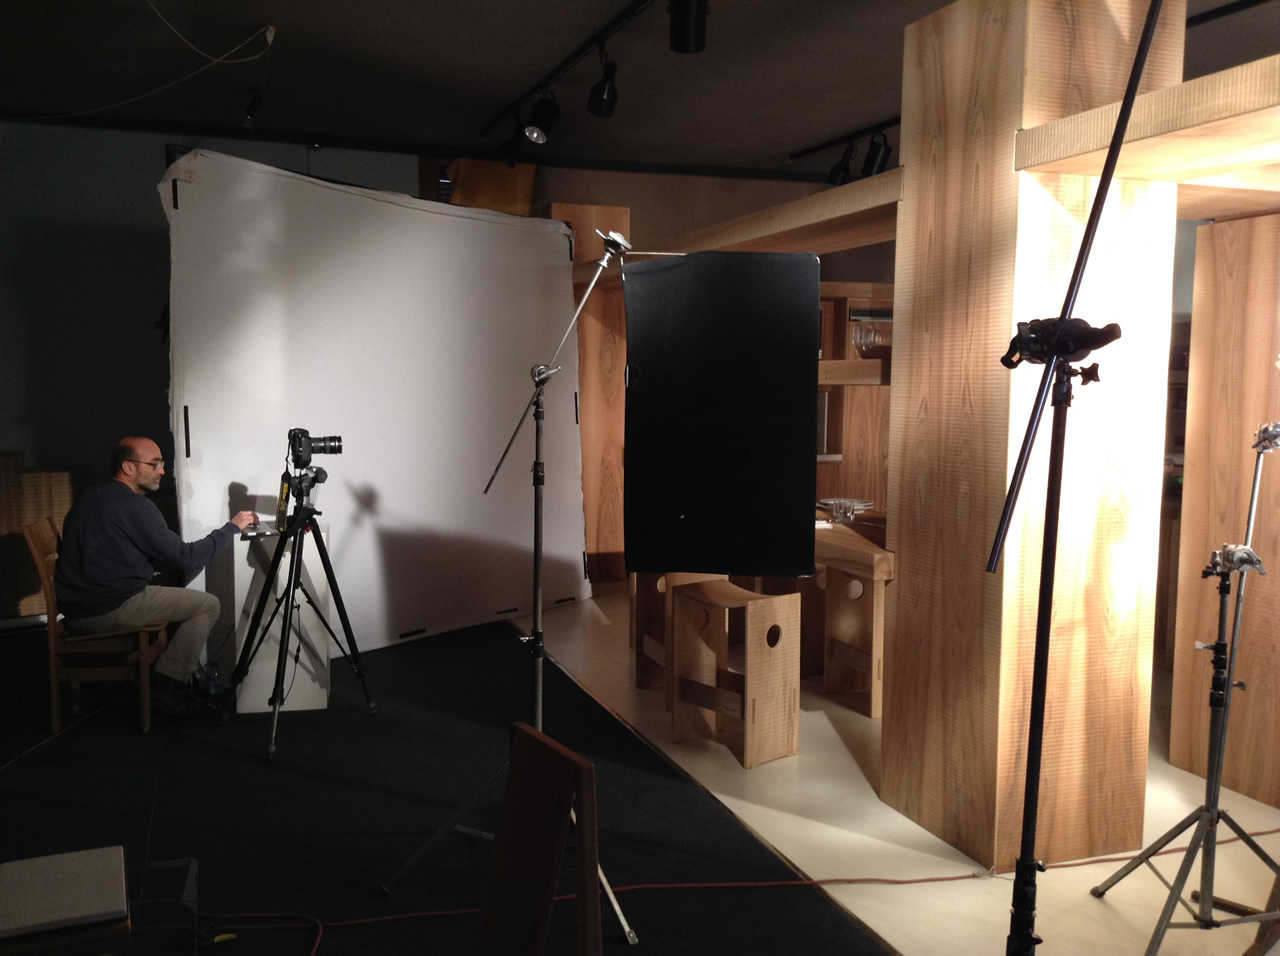 Habito Catalogue 2015 Work in Progress. Wood kitchen set